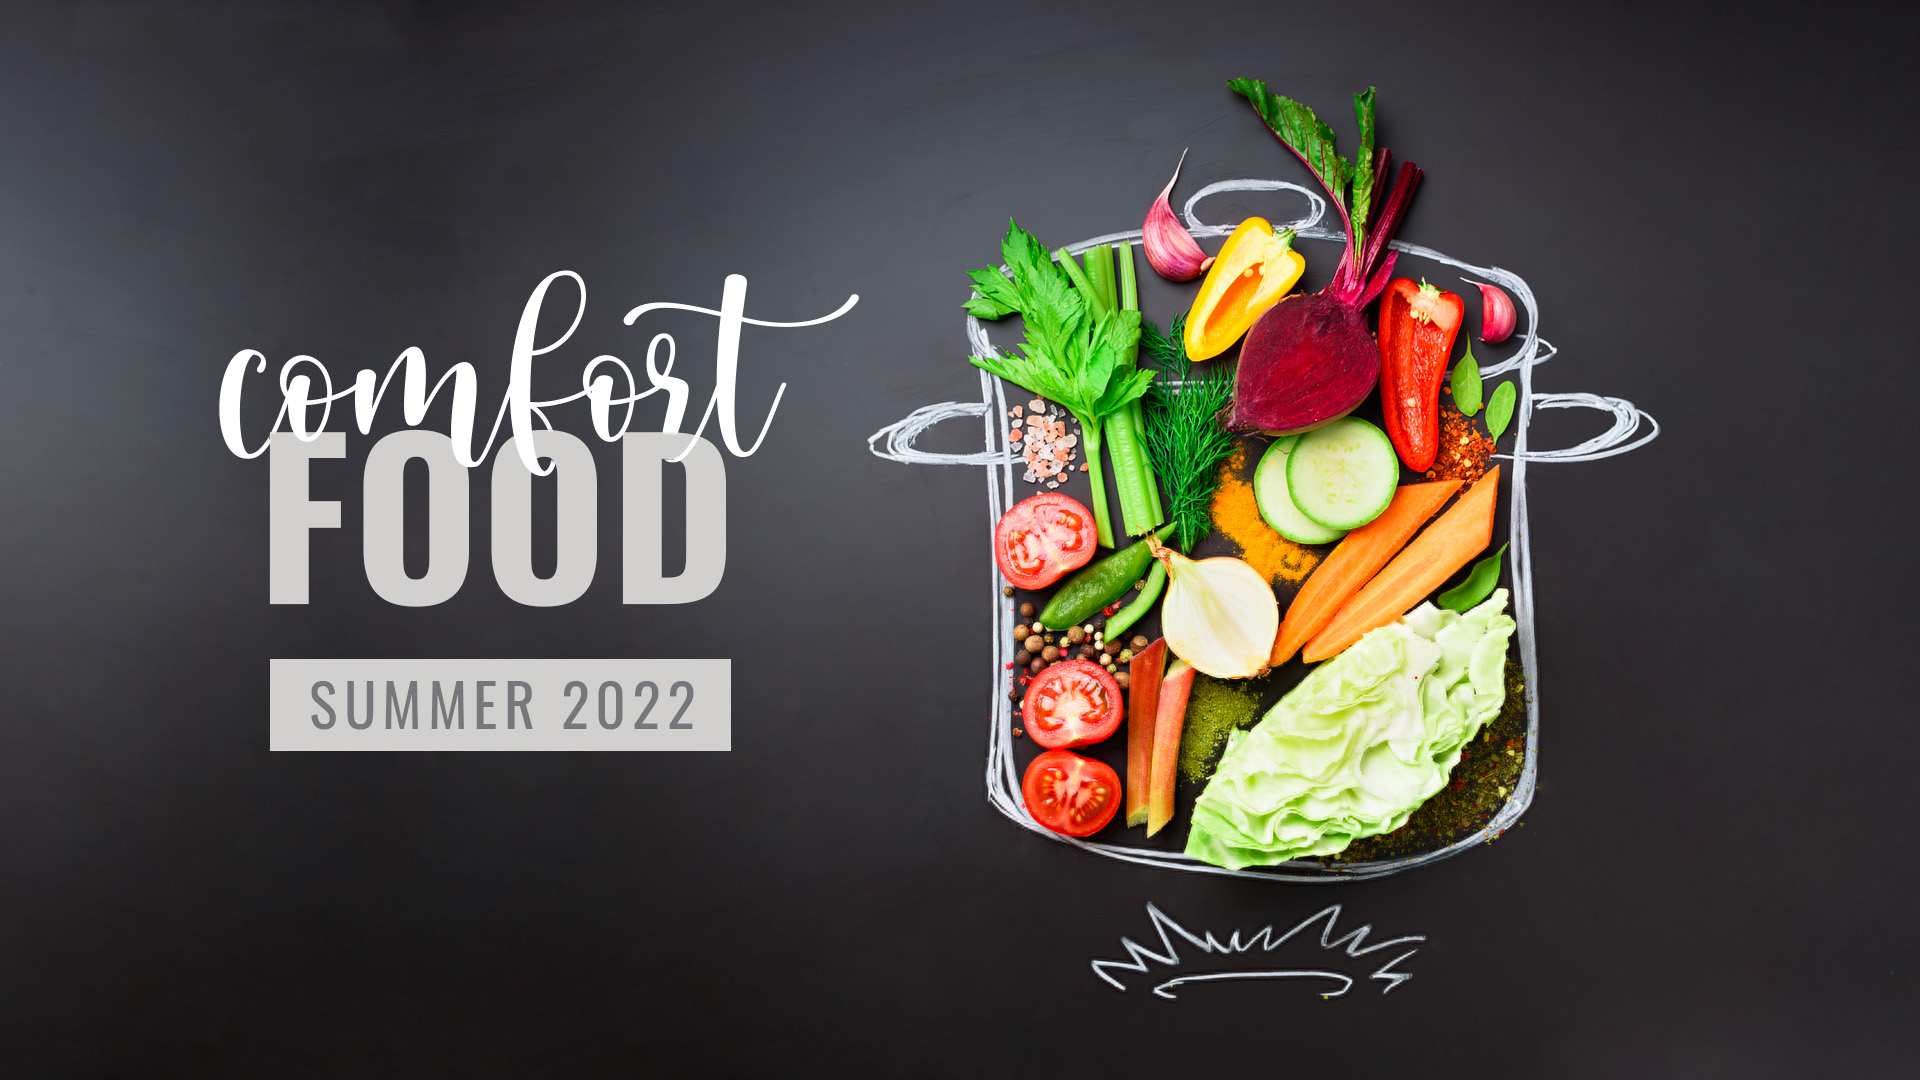 Summer 2022 Comfort Food